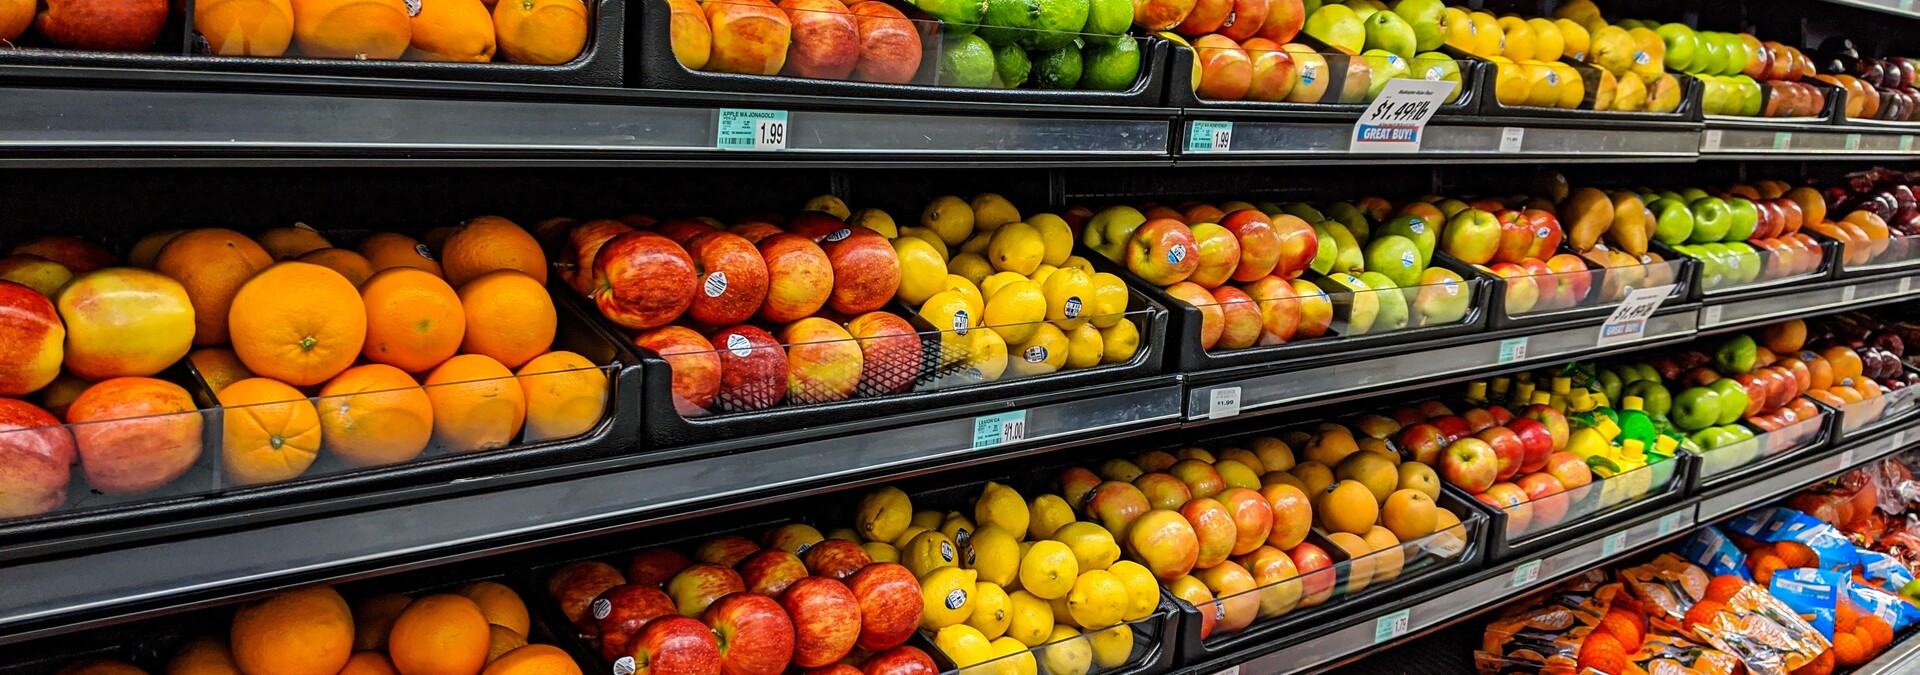 A photo of a supermarket shelf